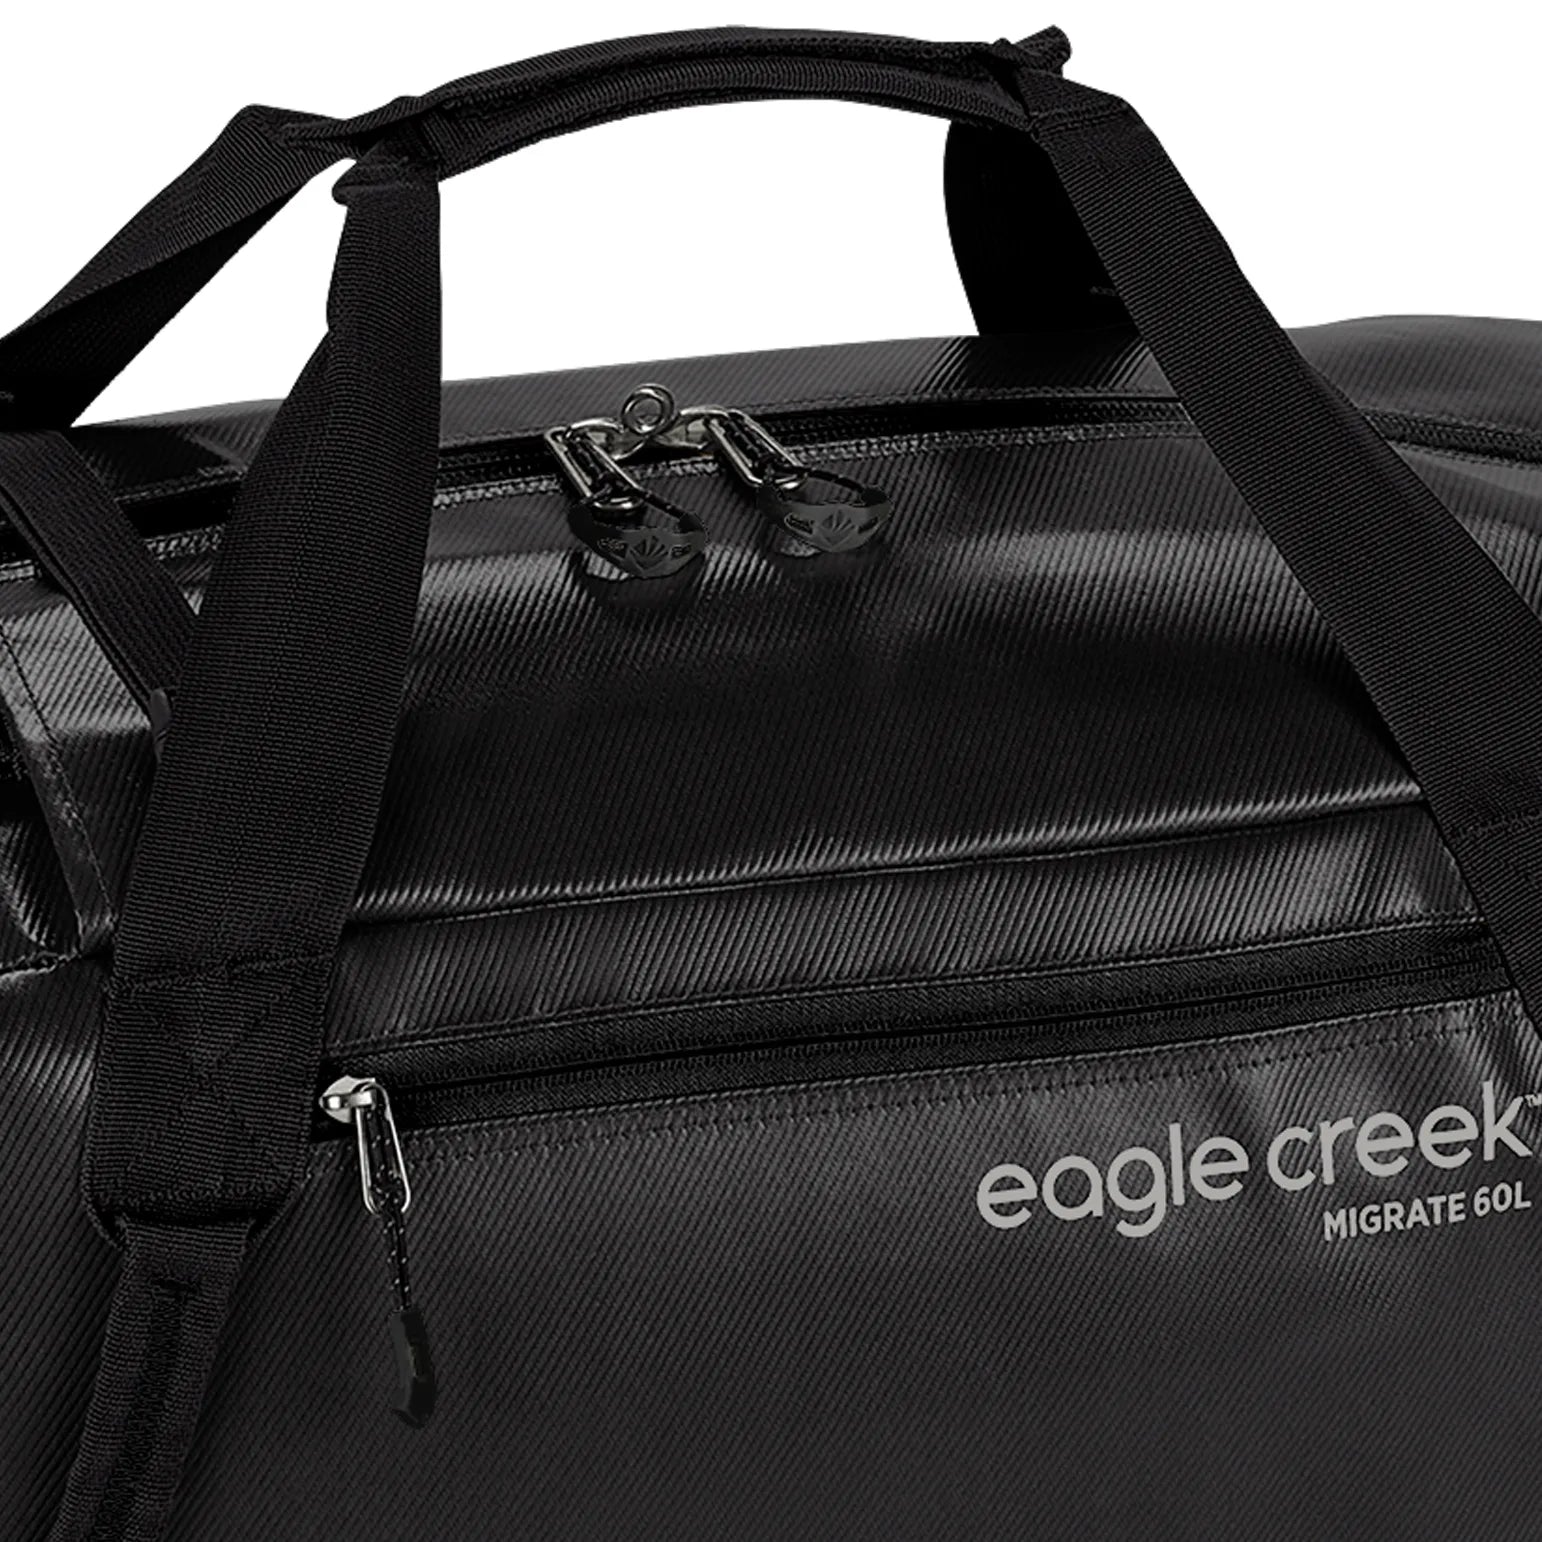 Eagle Creek Migrate Travel Bag 59 cm - Field Brown